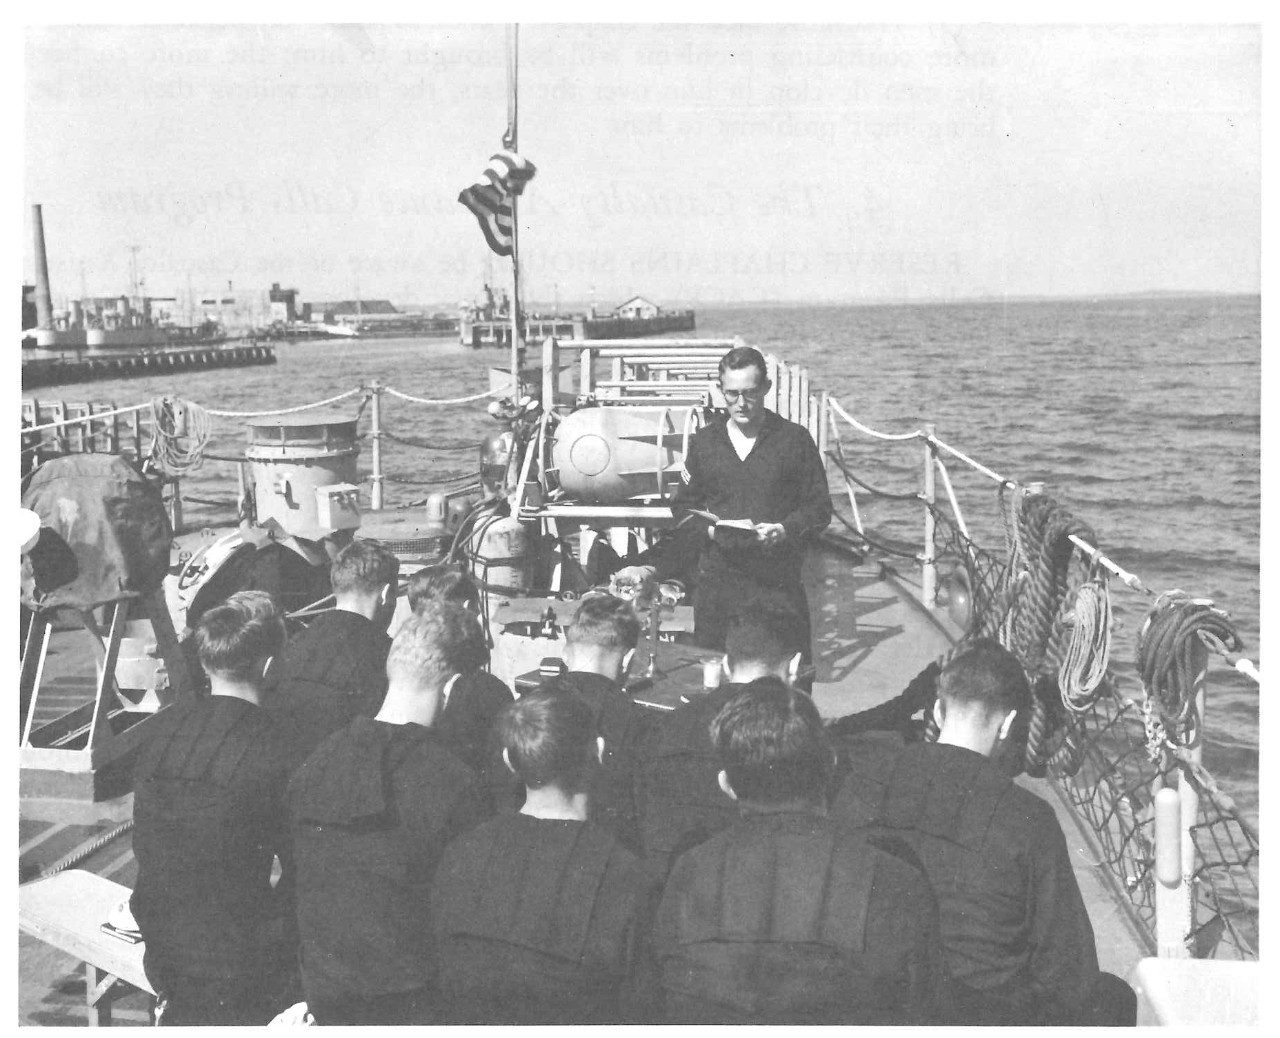 Rear view of seamen aboard moving ship